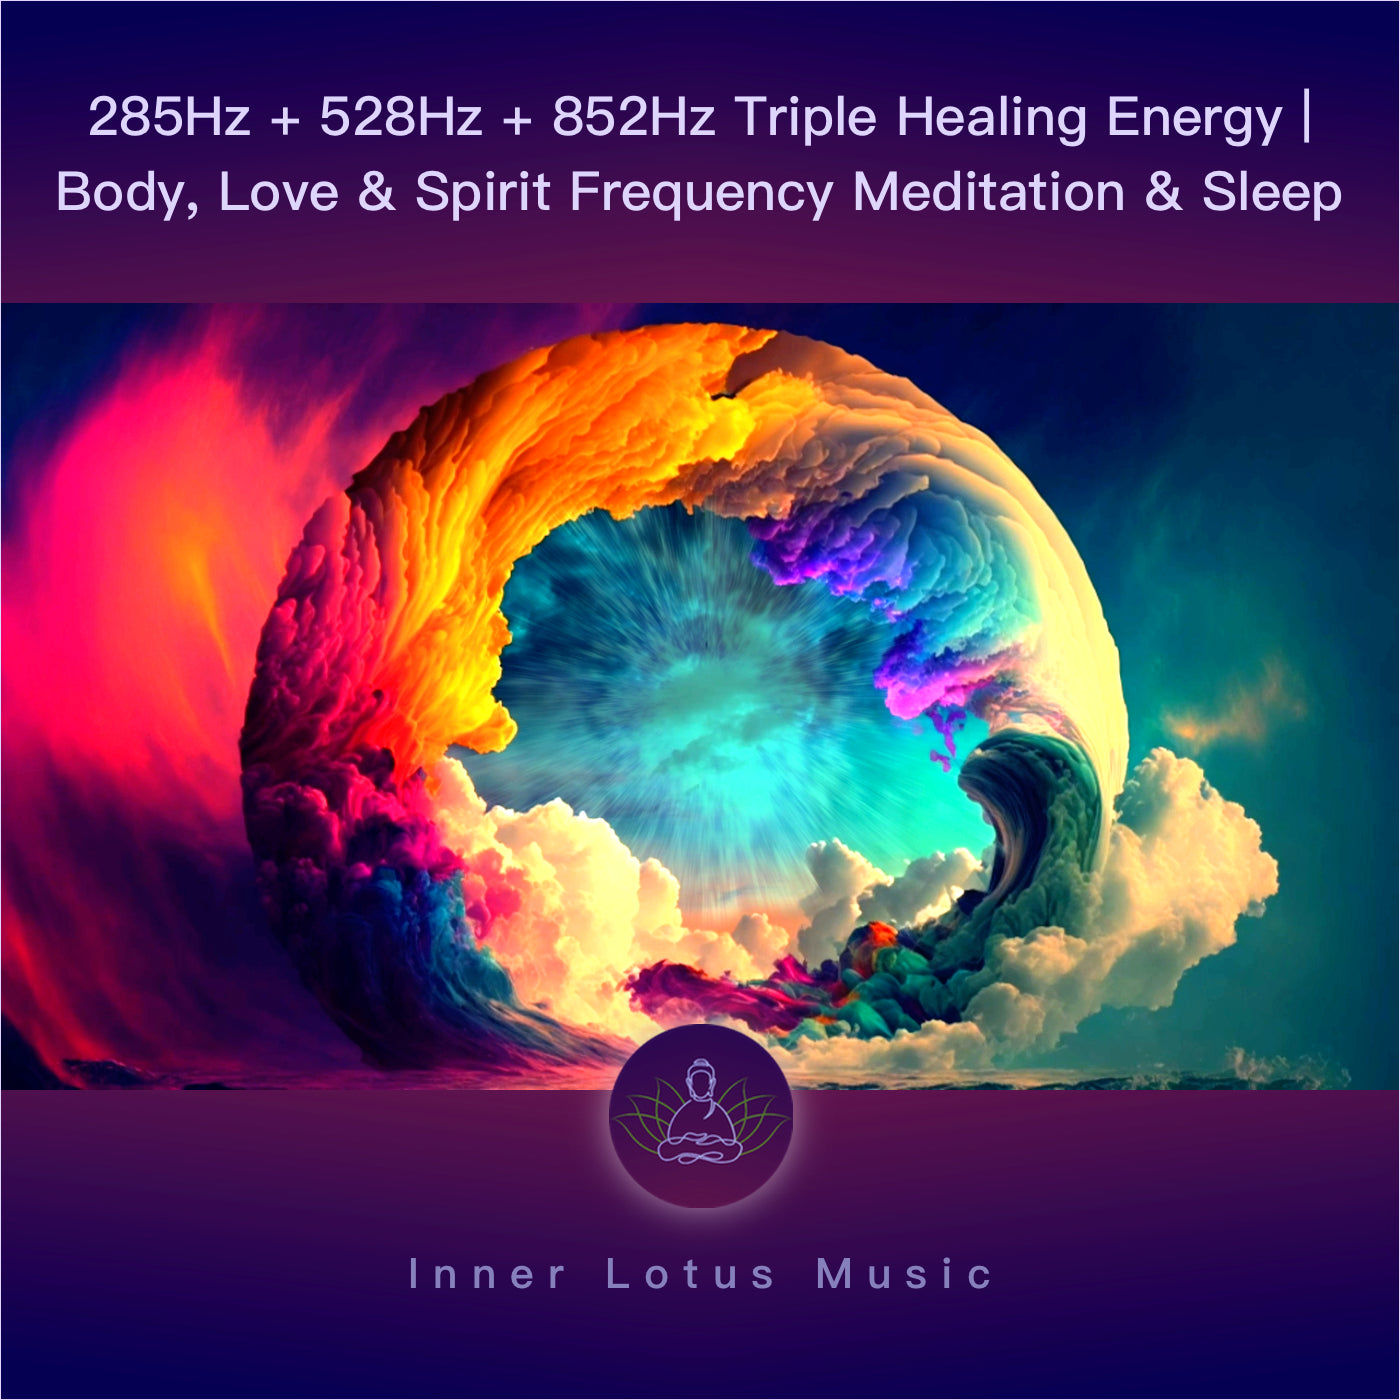 396Hz + 639Hz + 963Hz Triple Healing Energy | Peace Heart & Oneness Frequency Meditation Sleep Music